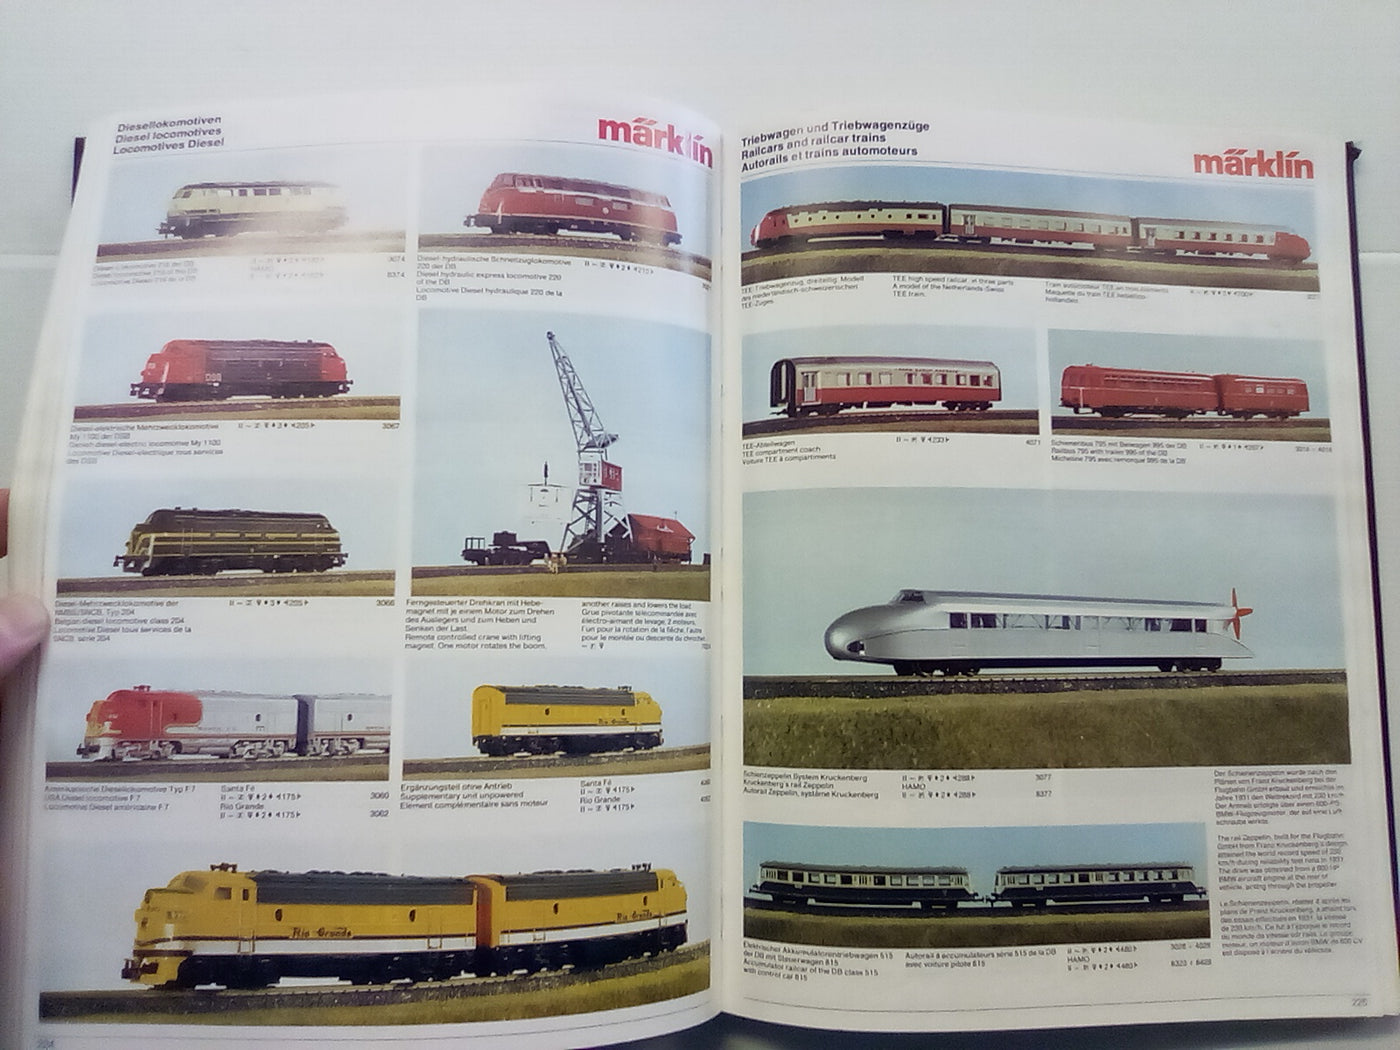 International Model Railways Guide HO 78/79